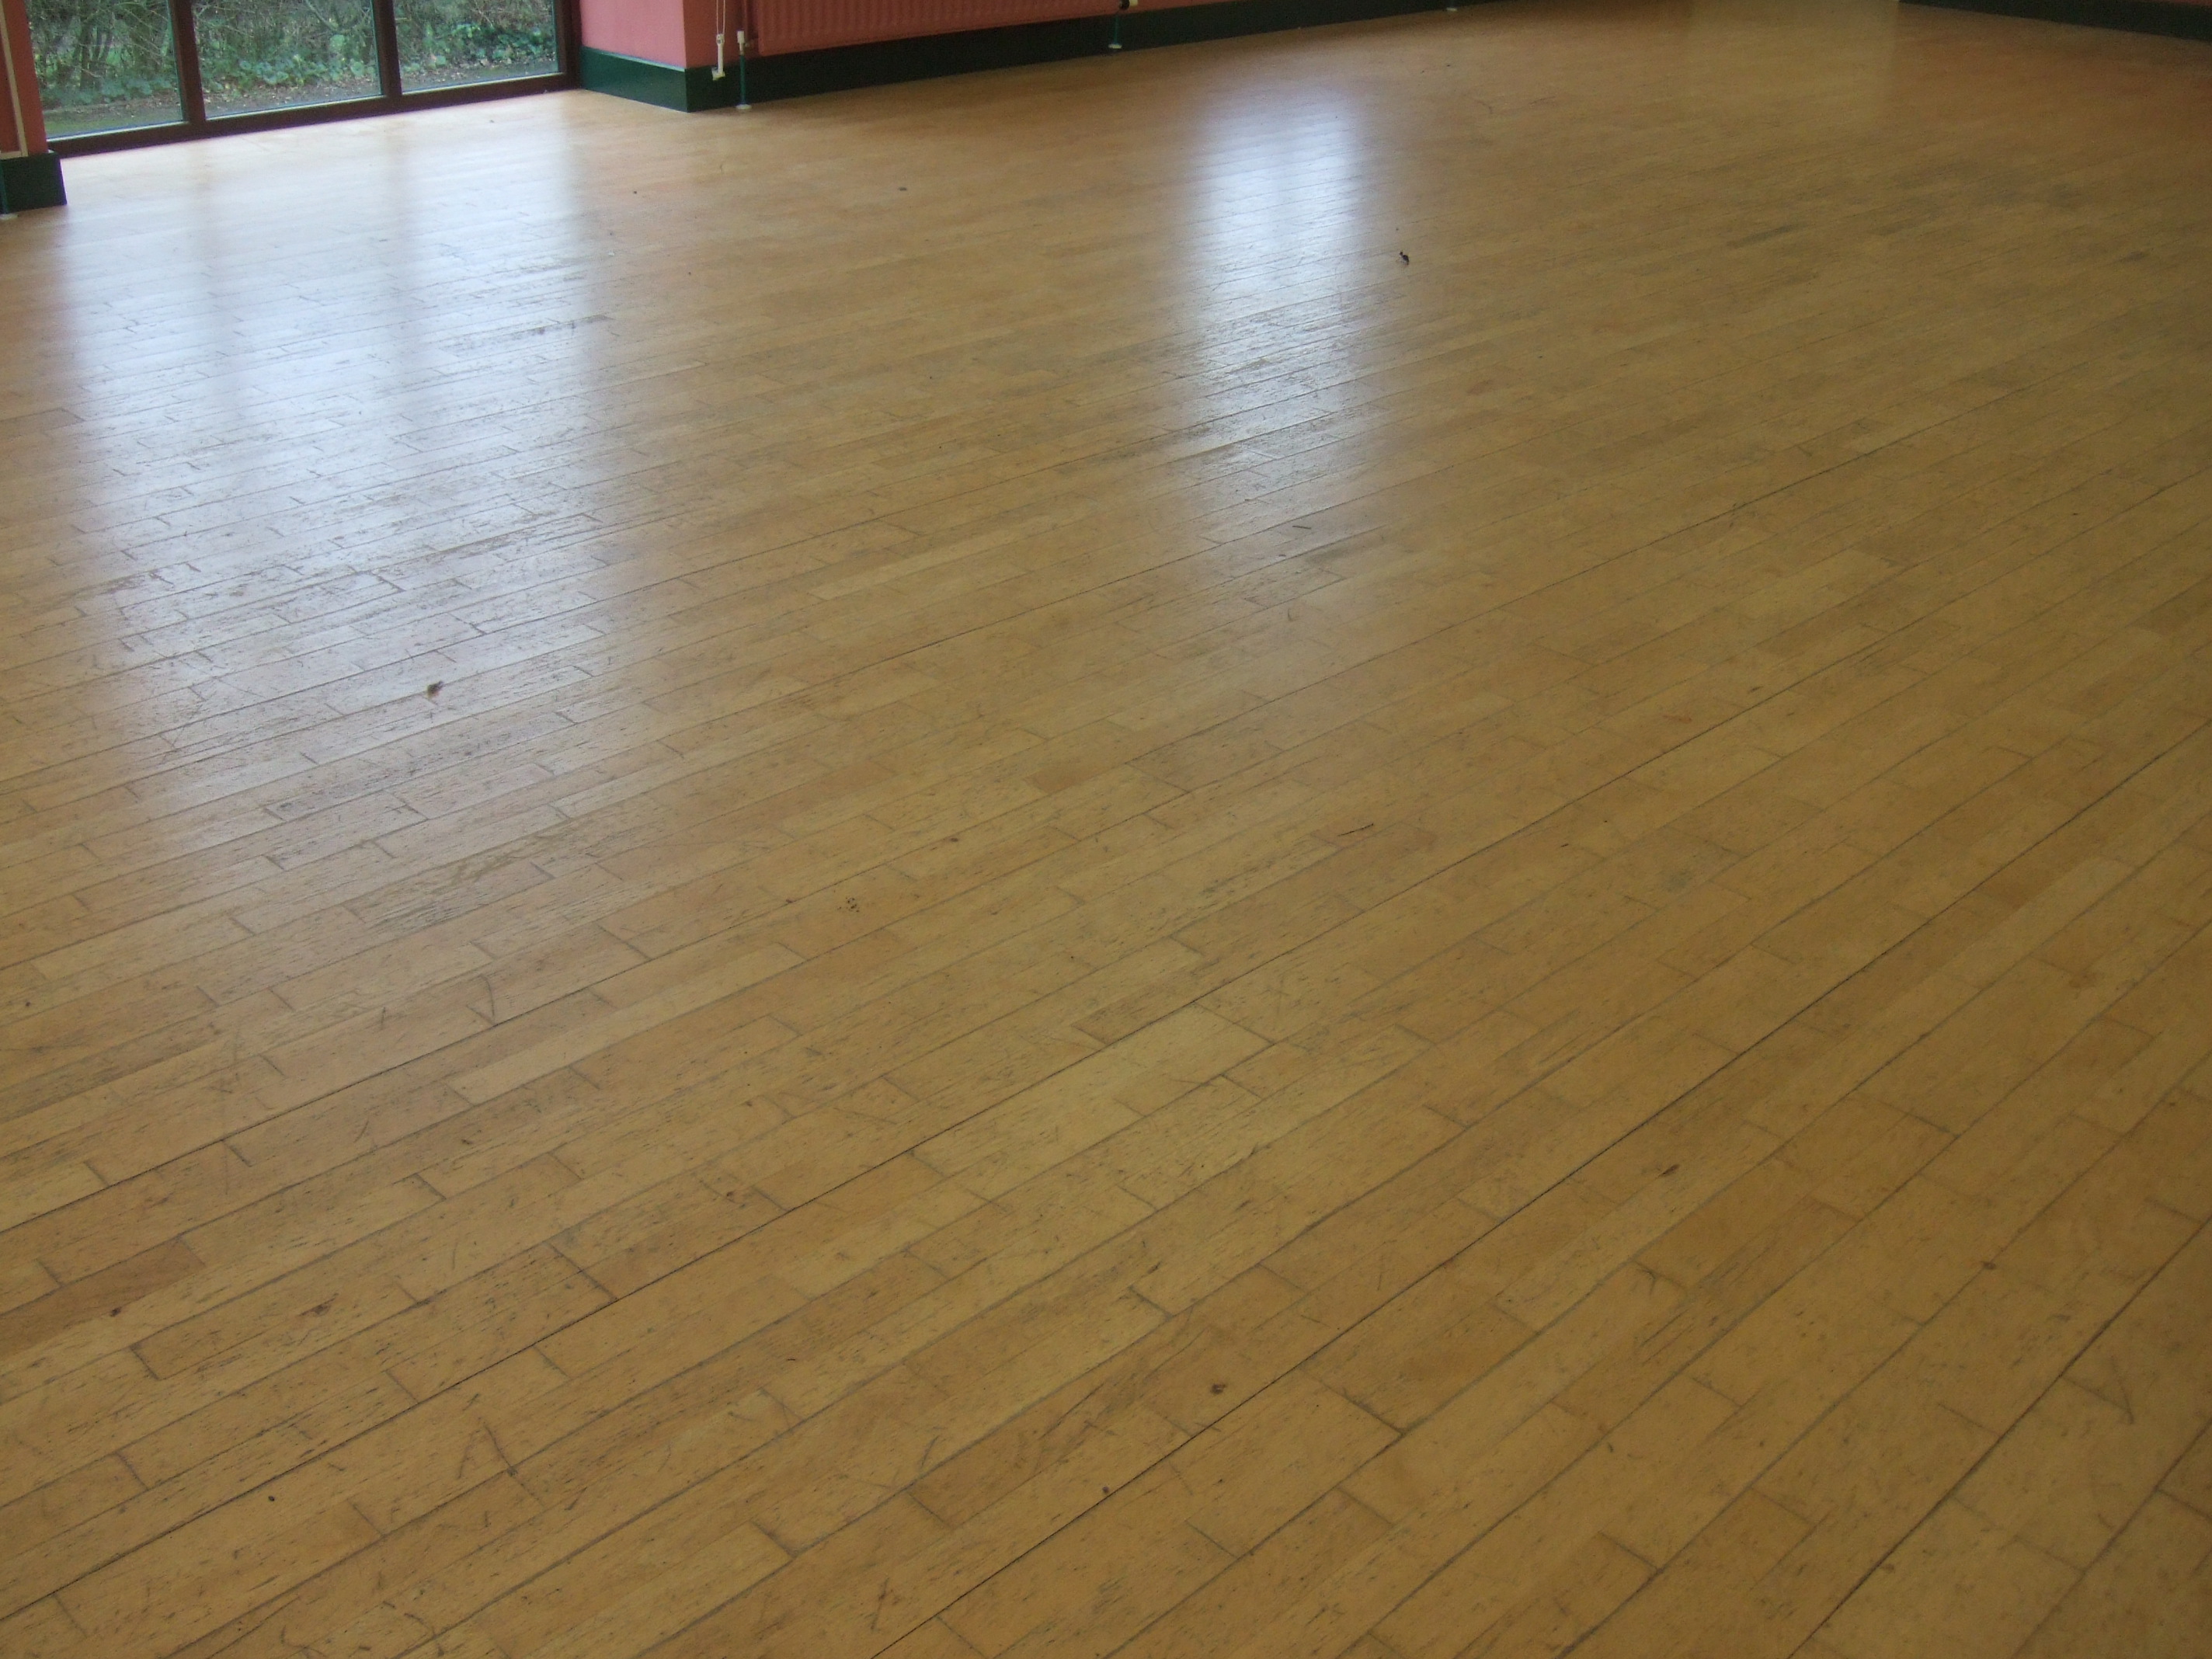 Community hall with damaged beech laminate flooring 